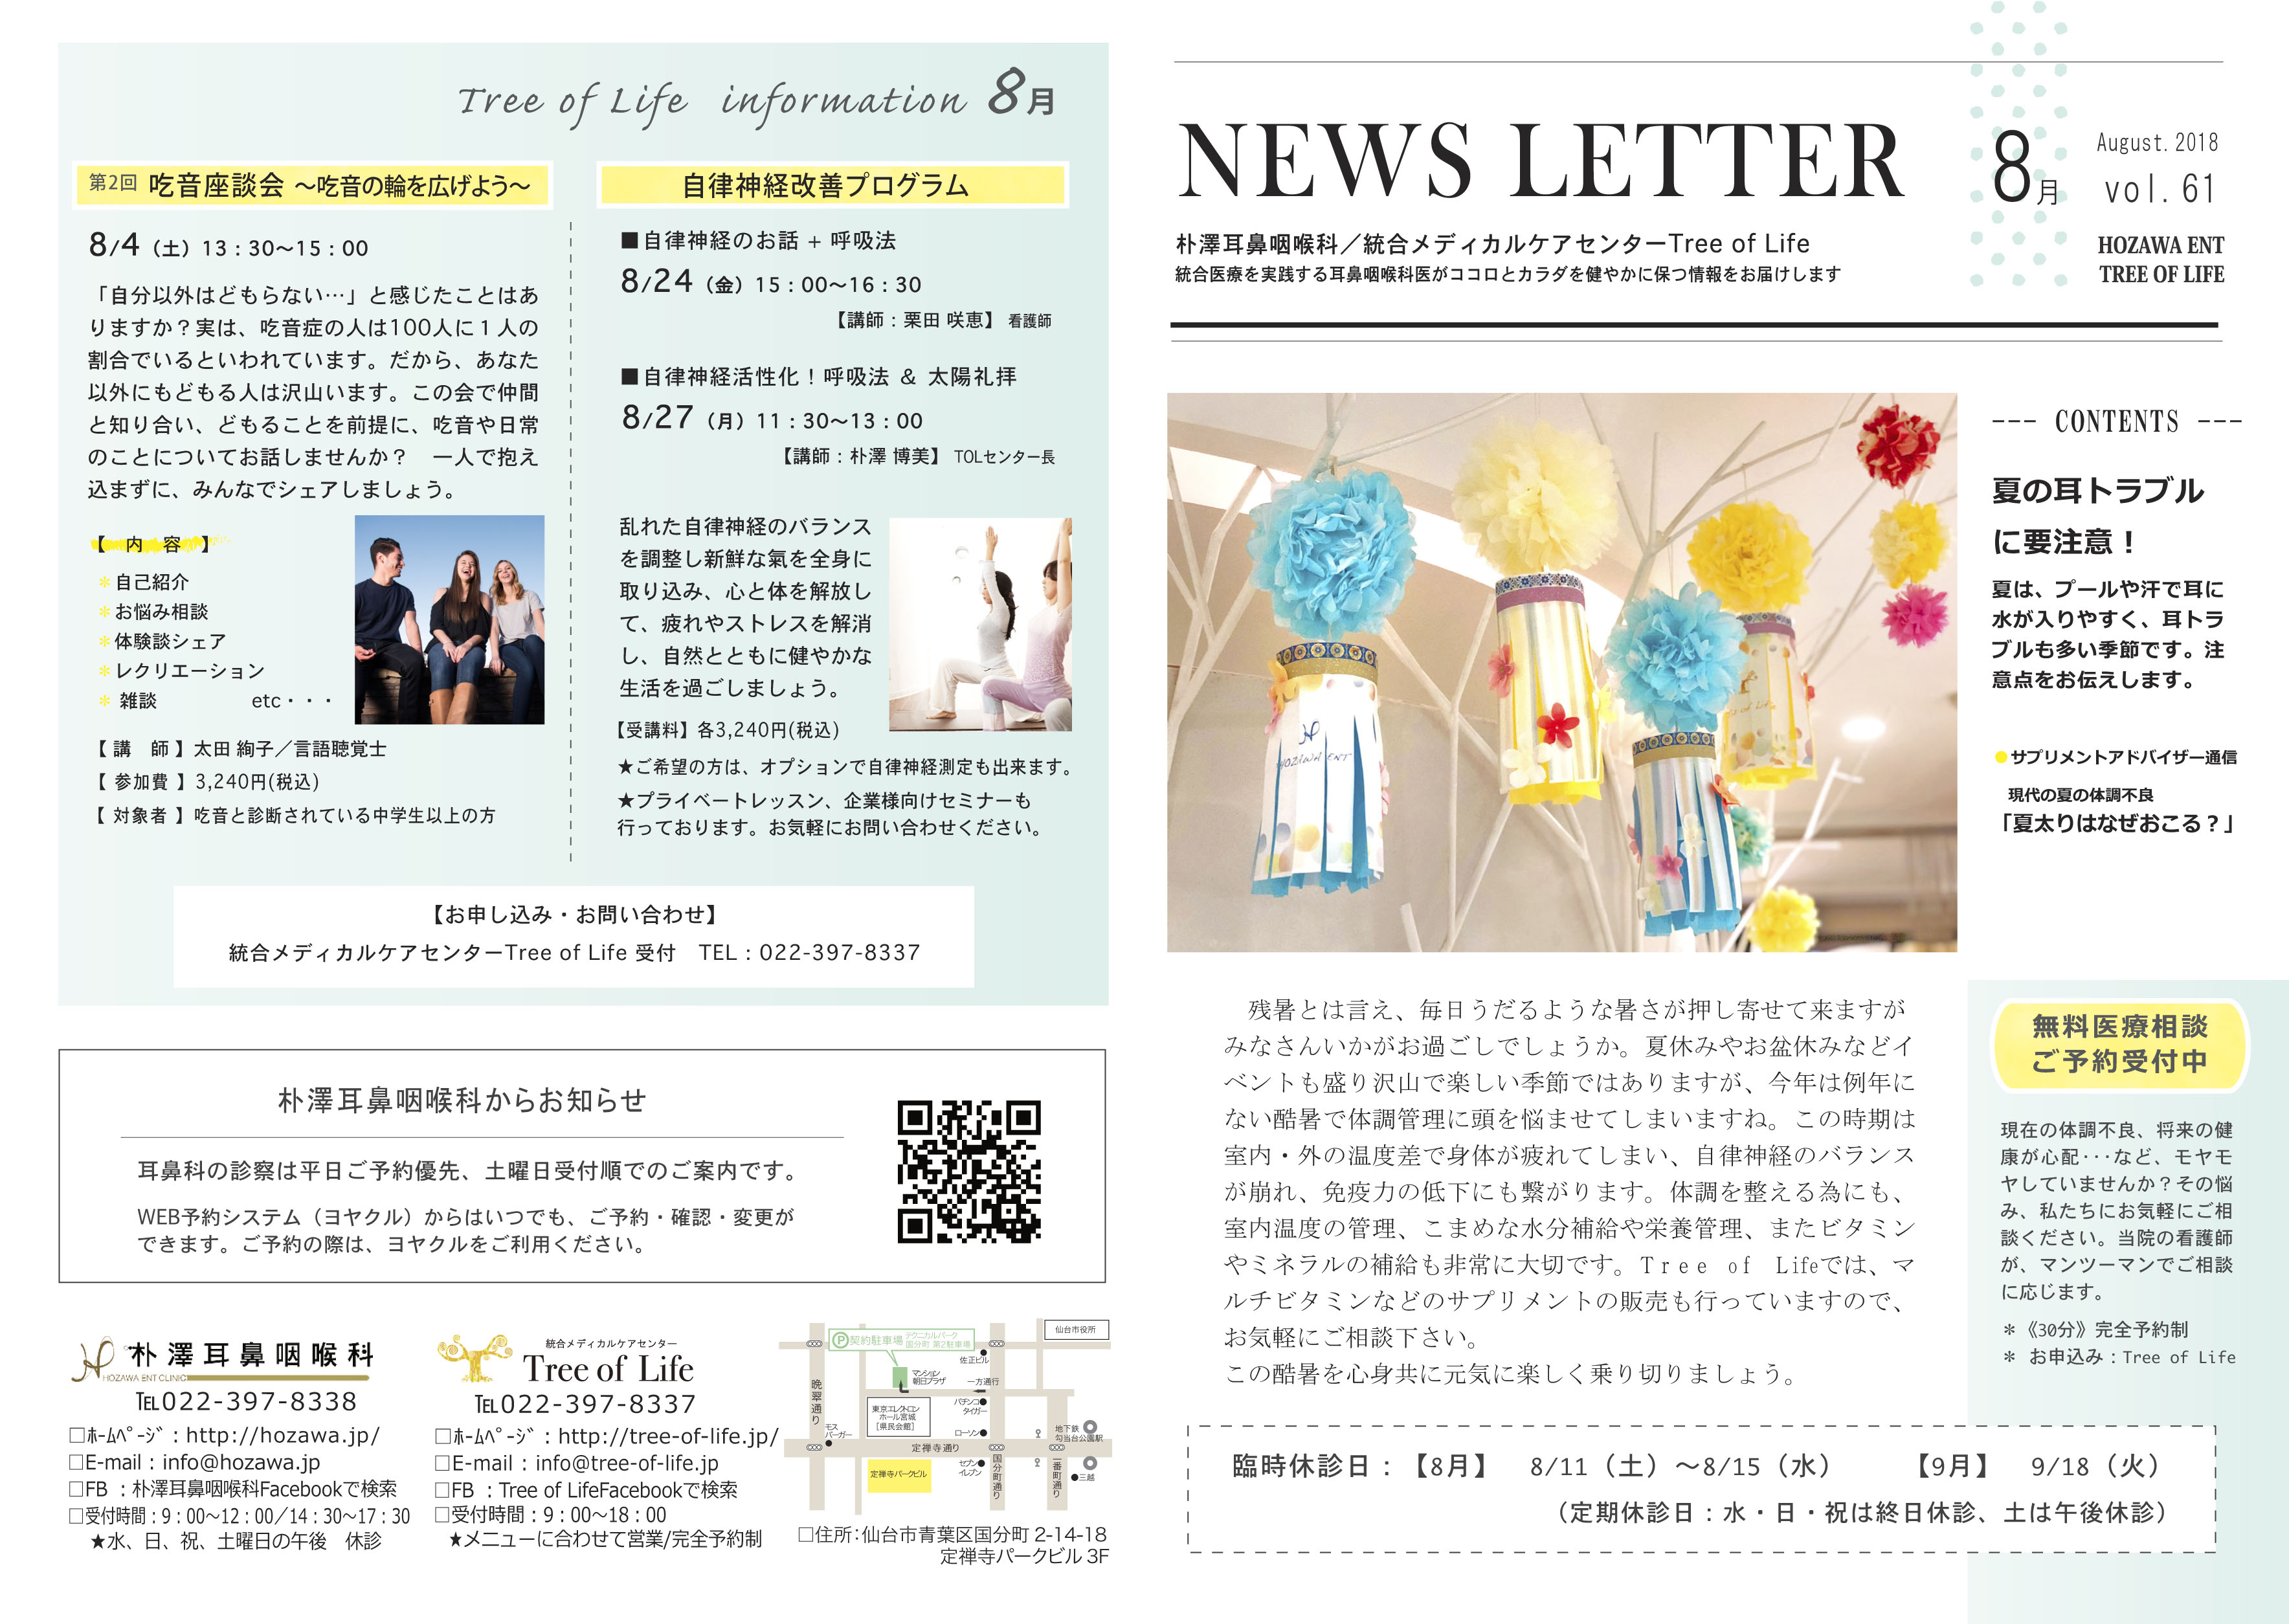 http://hozawa.jp/news/news_img/newsletter_omote30.8.jpg